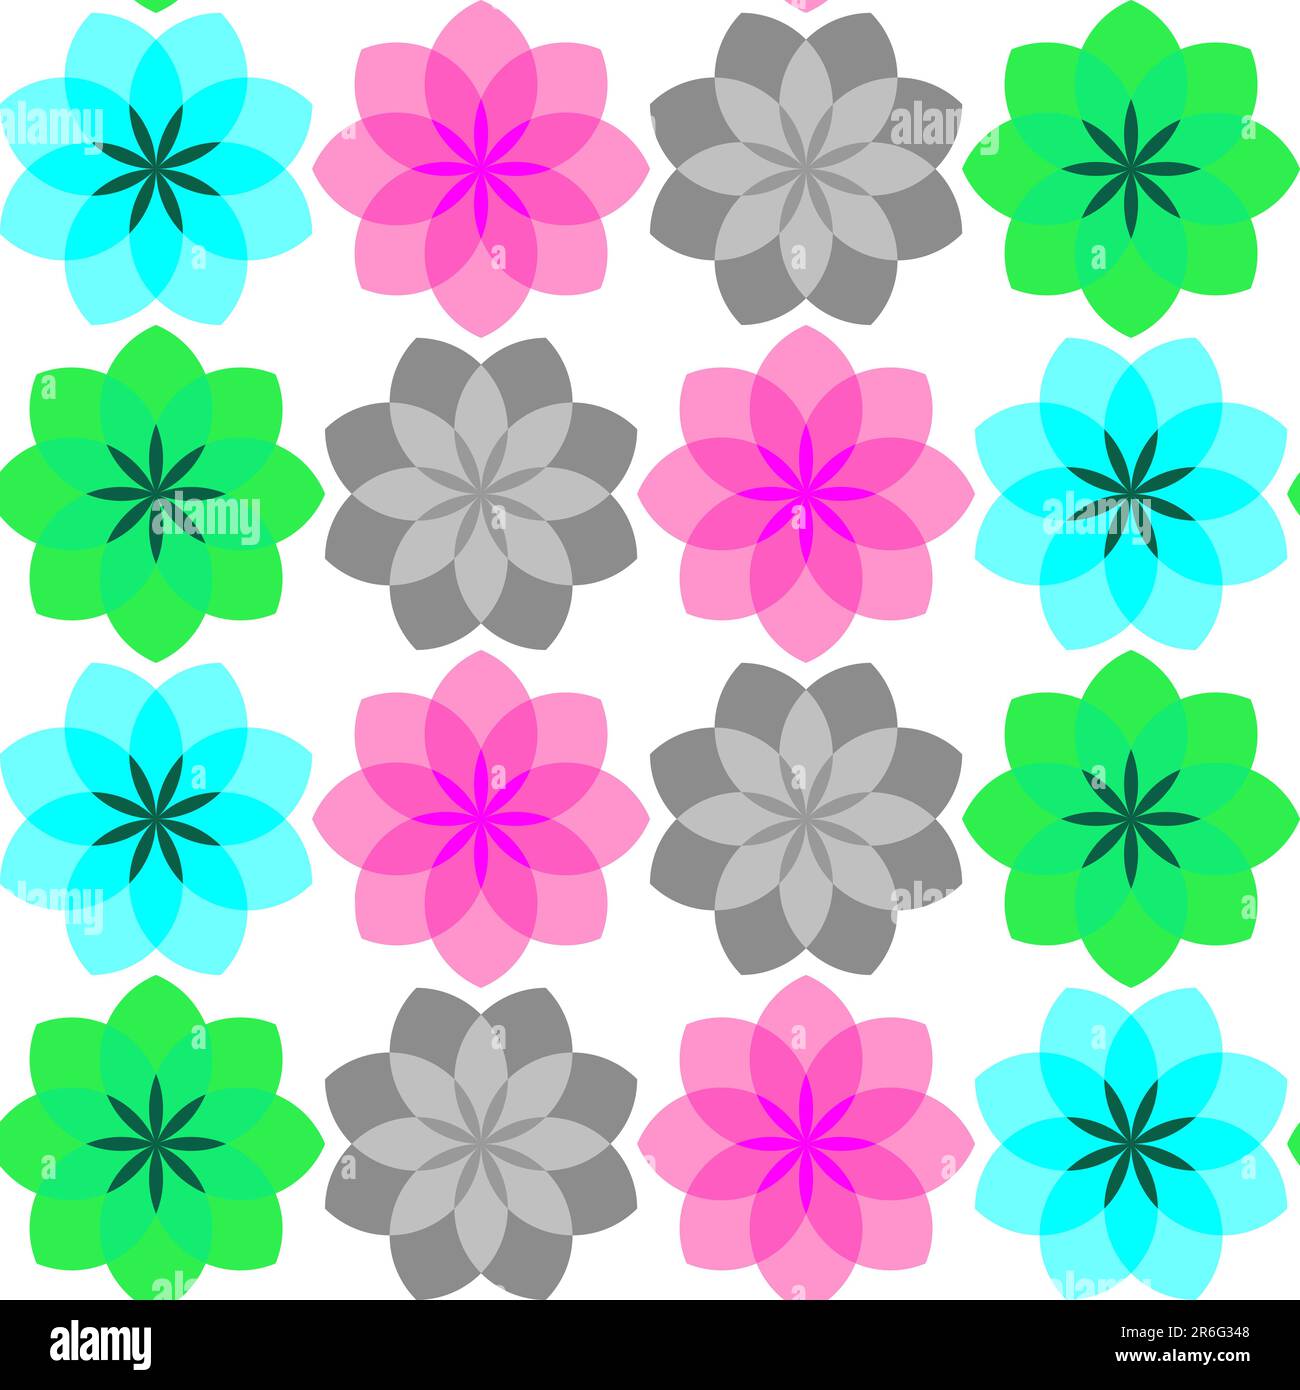 fiori colorati motivo senza cuciture, illustrazione grafica vettoriale Illustrazione Vettoriale